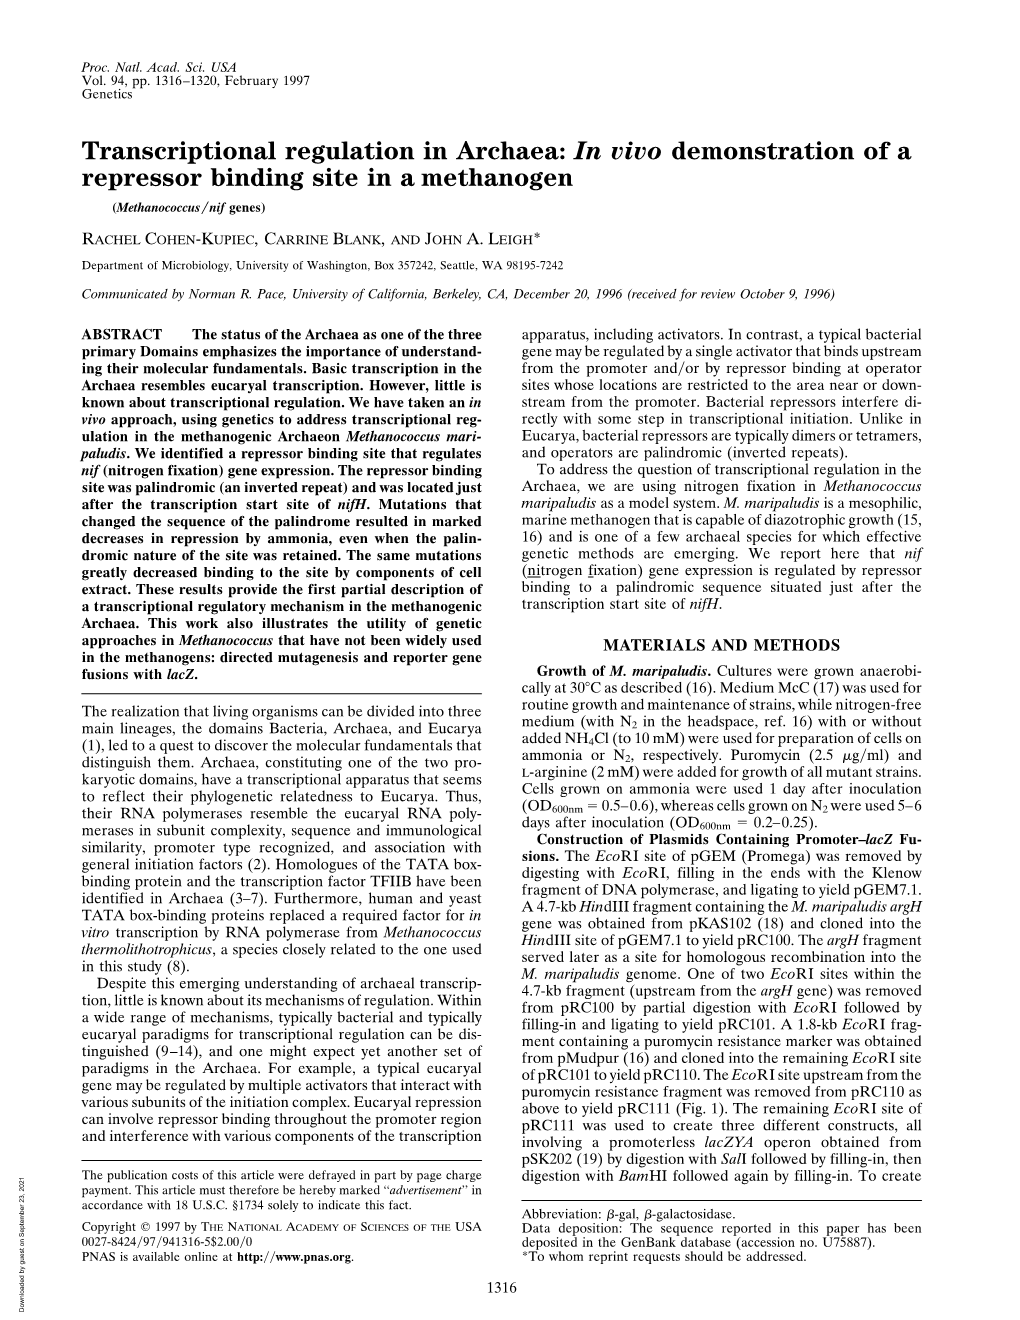 Transcriptional Regulation in Archaea: in Vivo Demonstration of a Repressor Binding Site in a Methanogen (Methanococcus͞nif Genes)